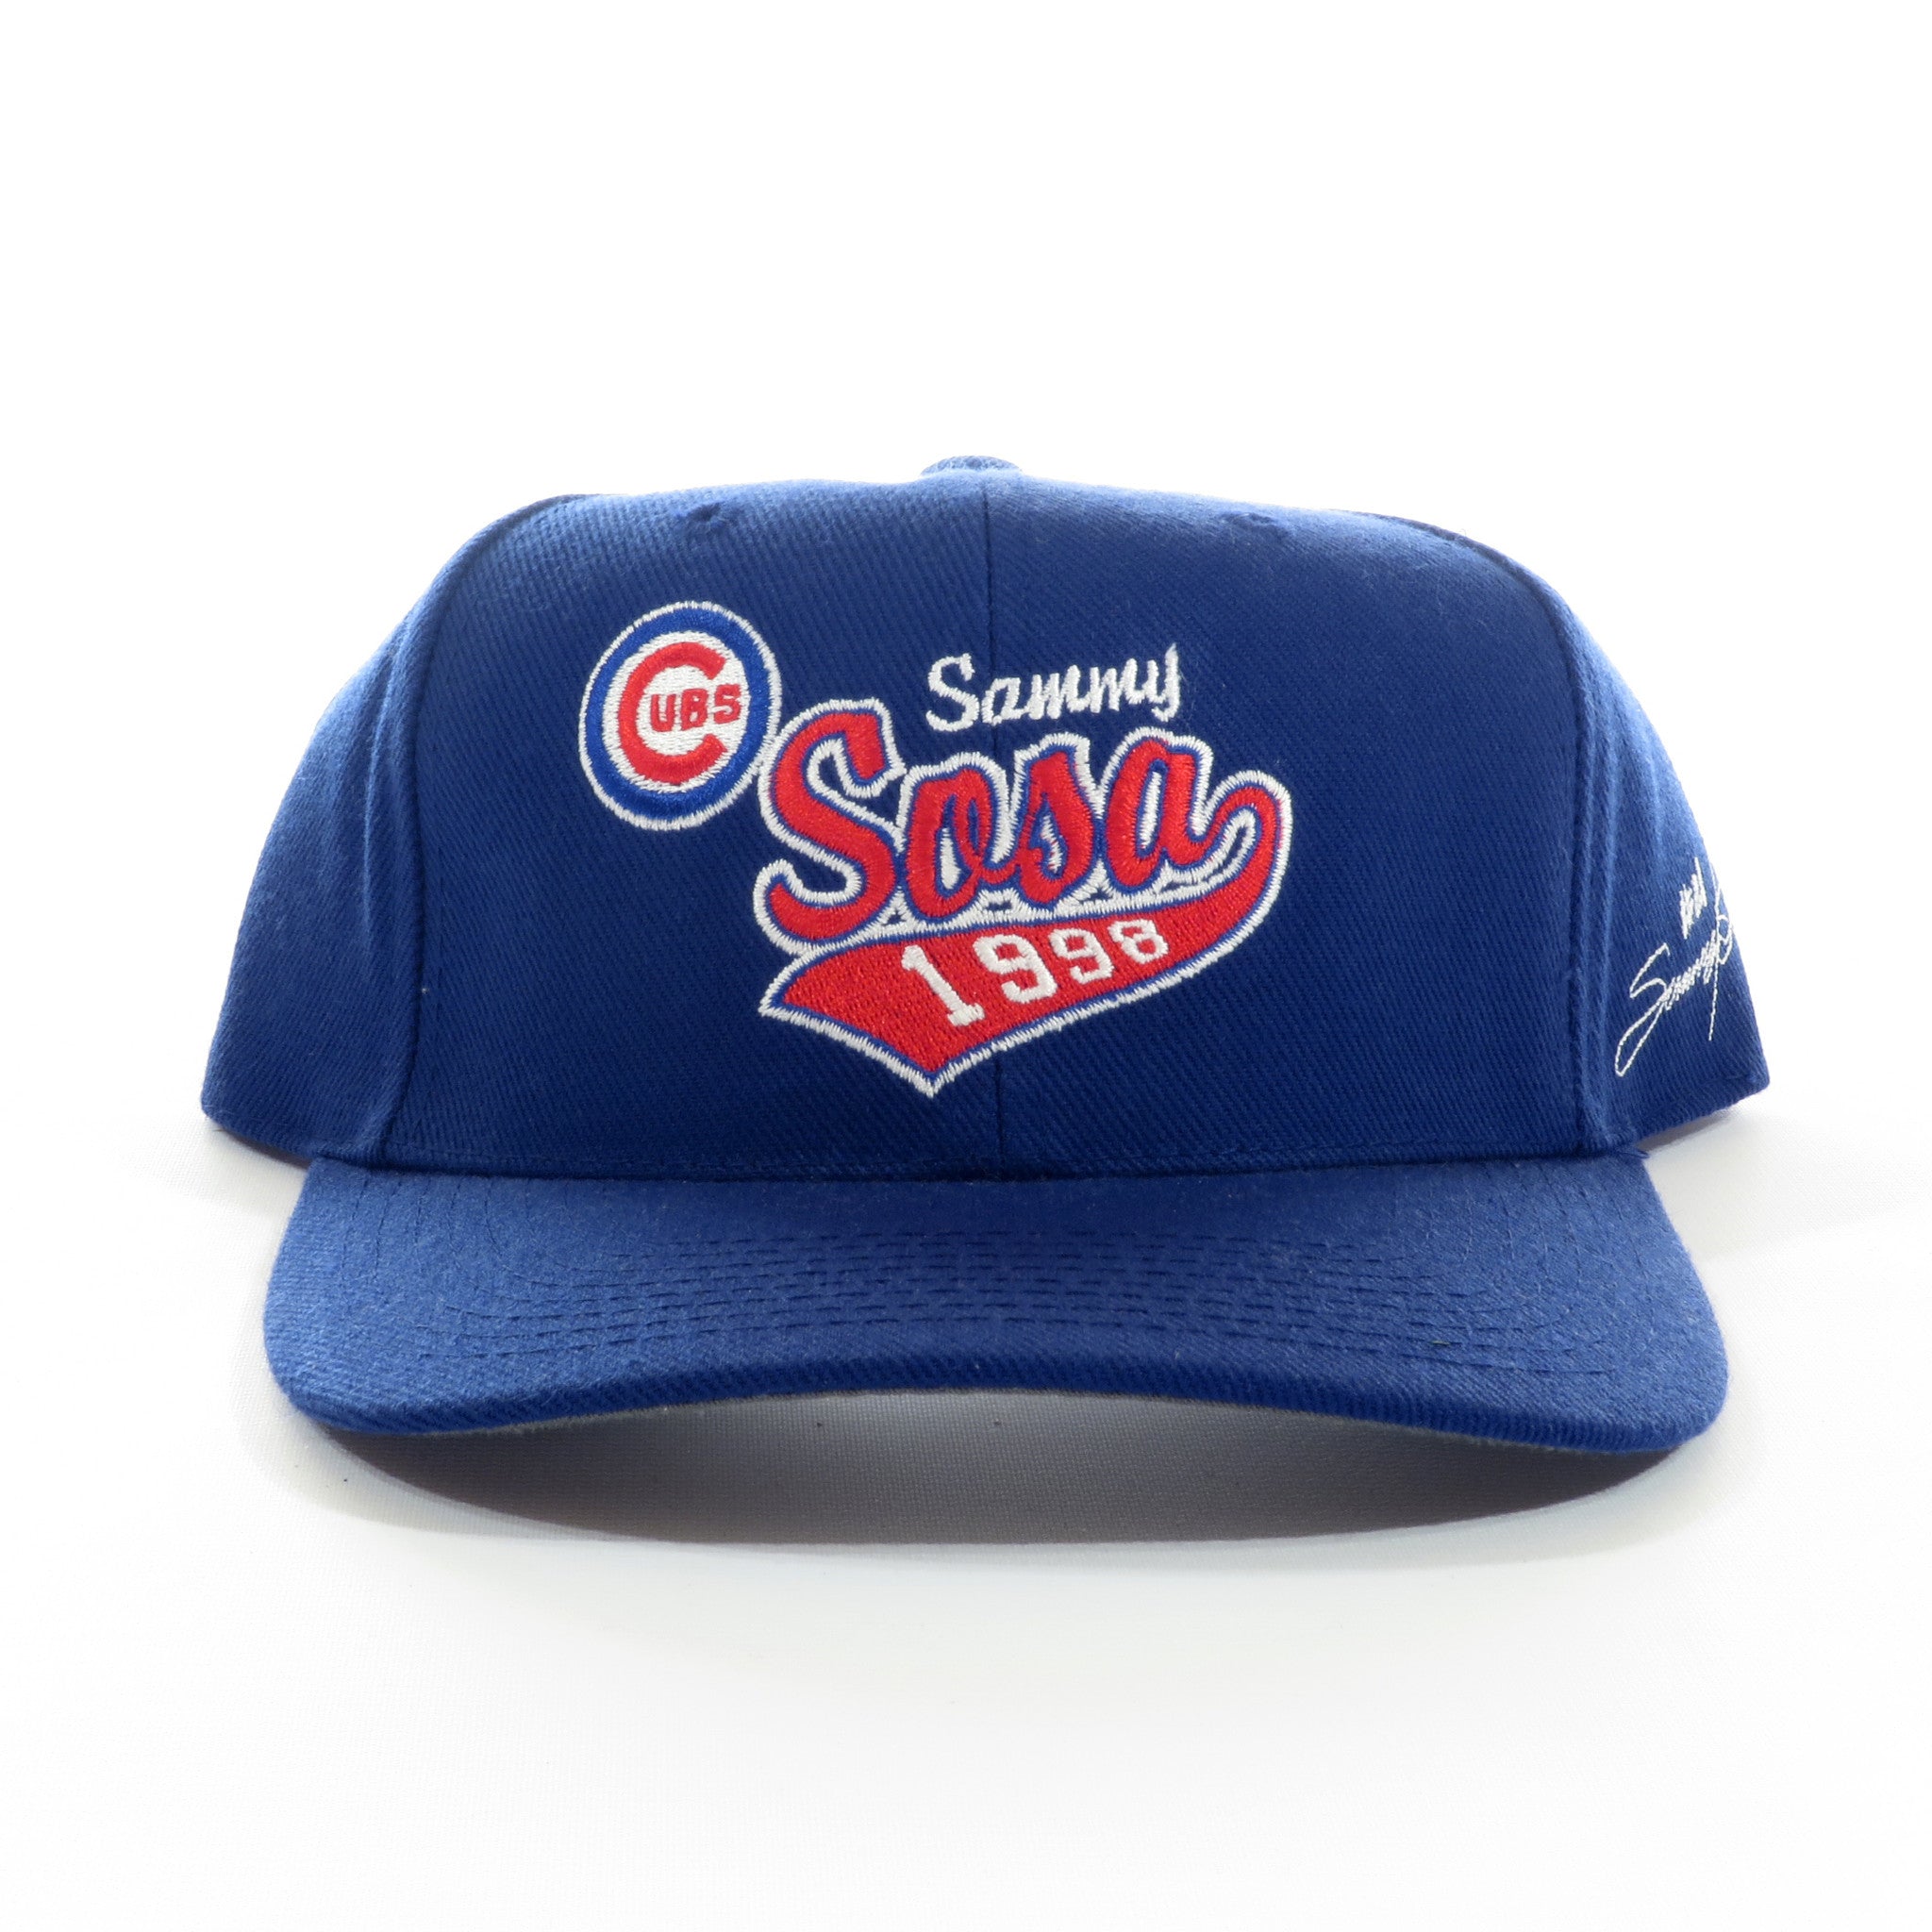 Sports Specialties Sammy Sosa Chicago Cubs Snapback Hat